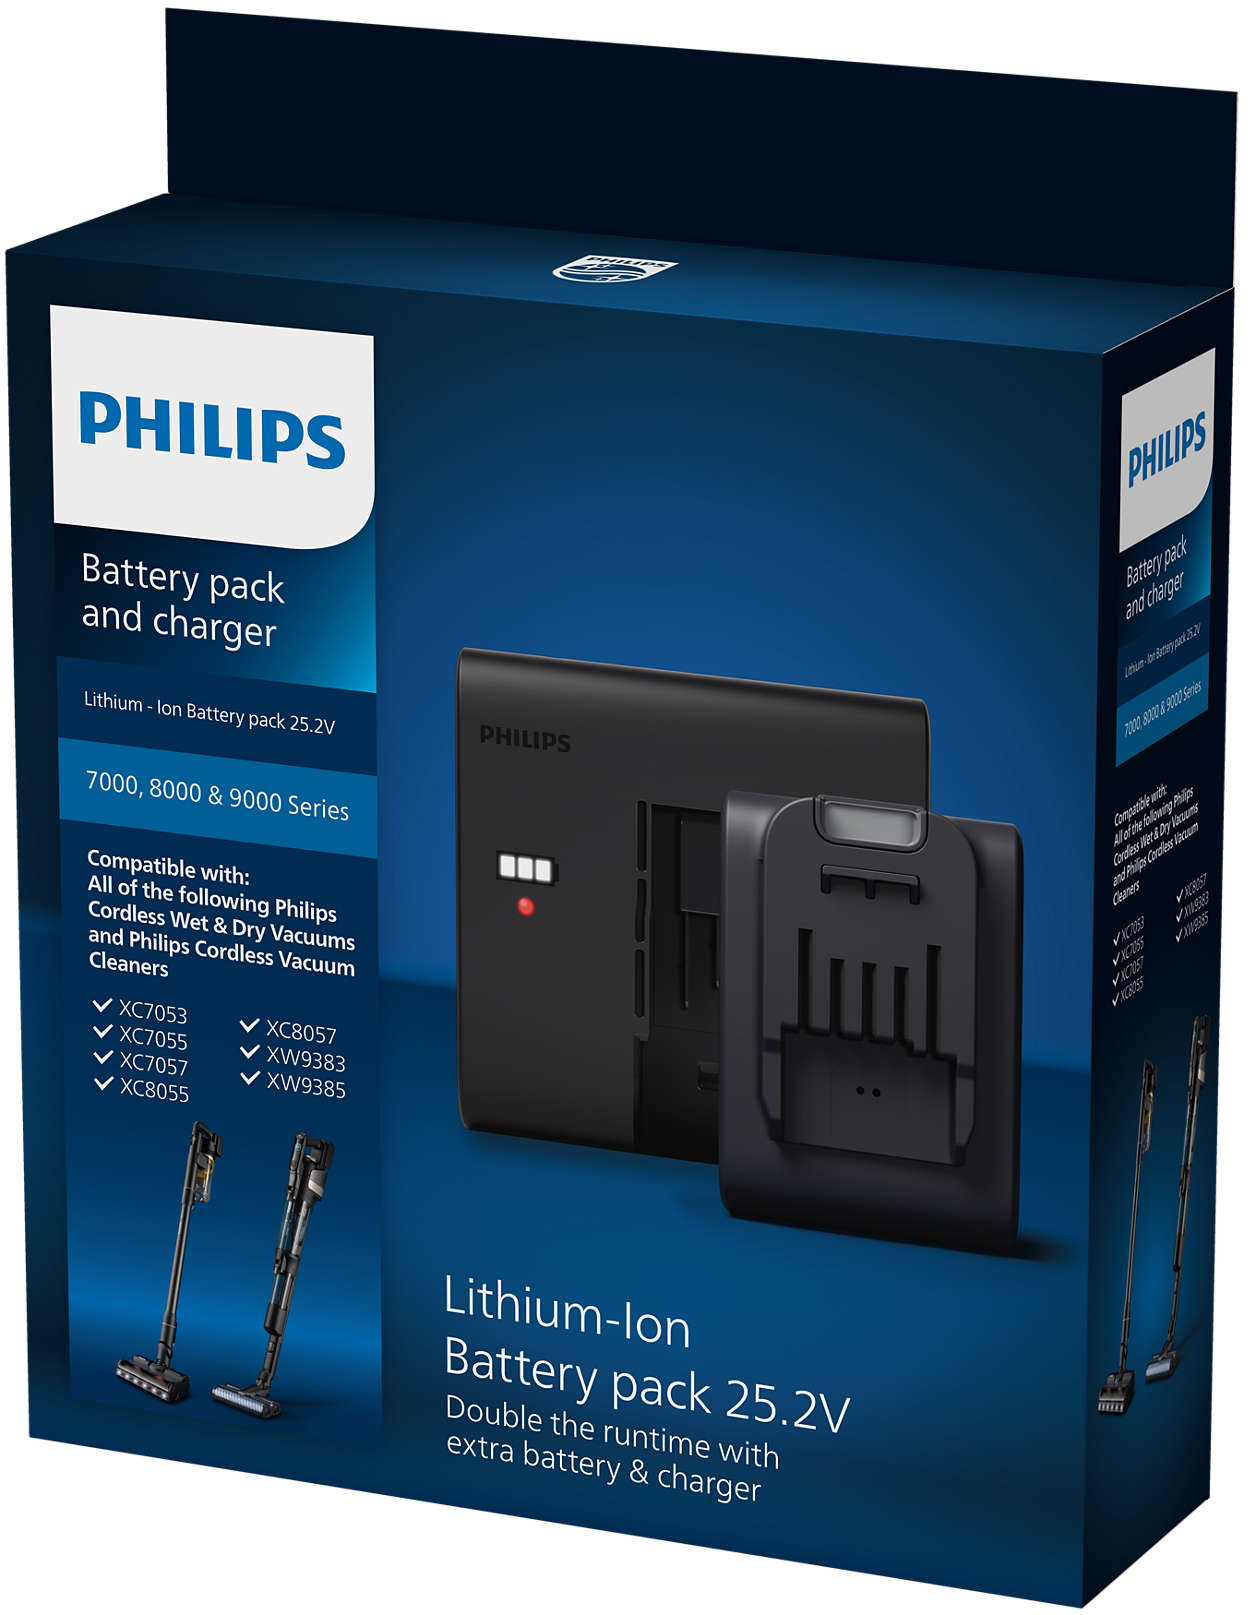 Lithium-Ion Battery pack 25.2V